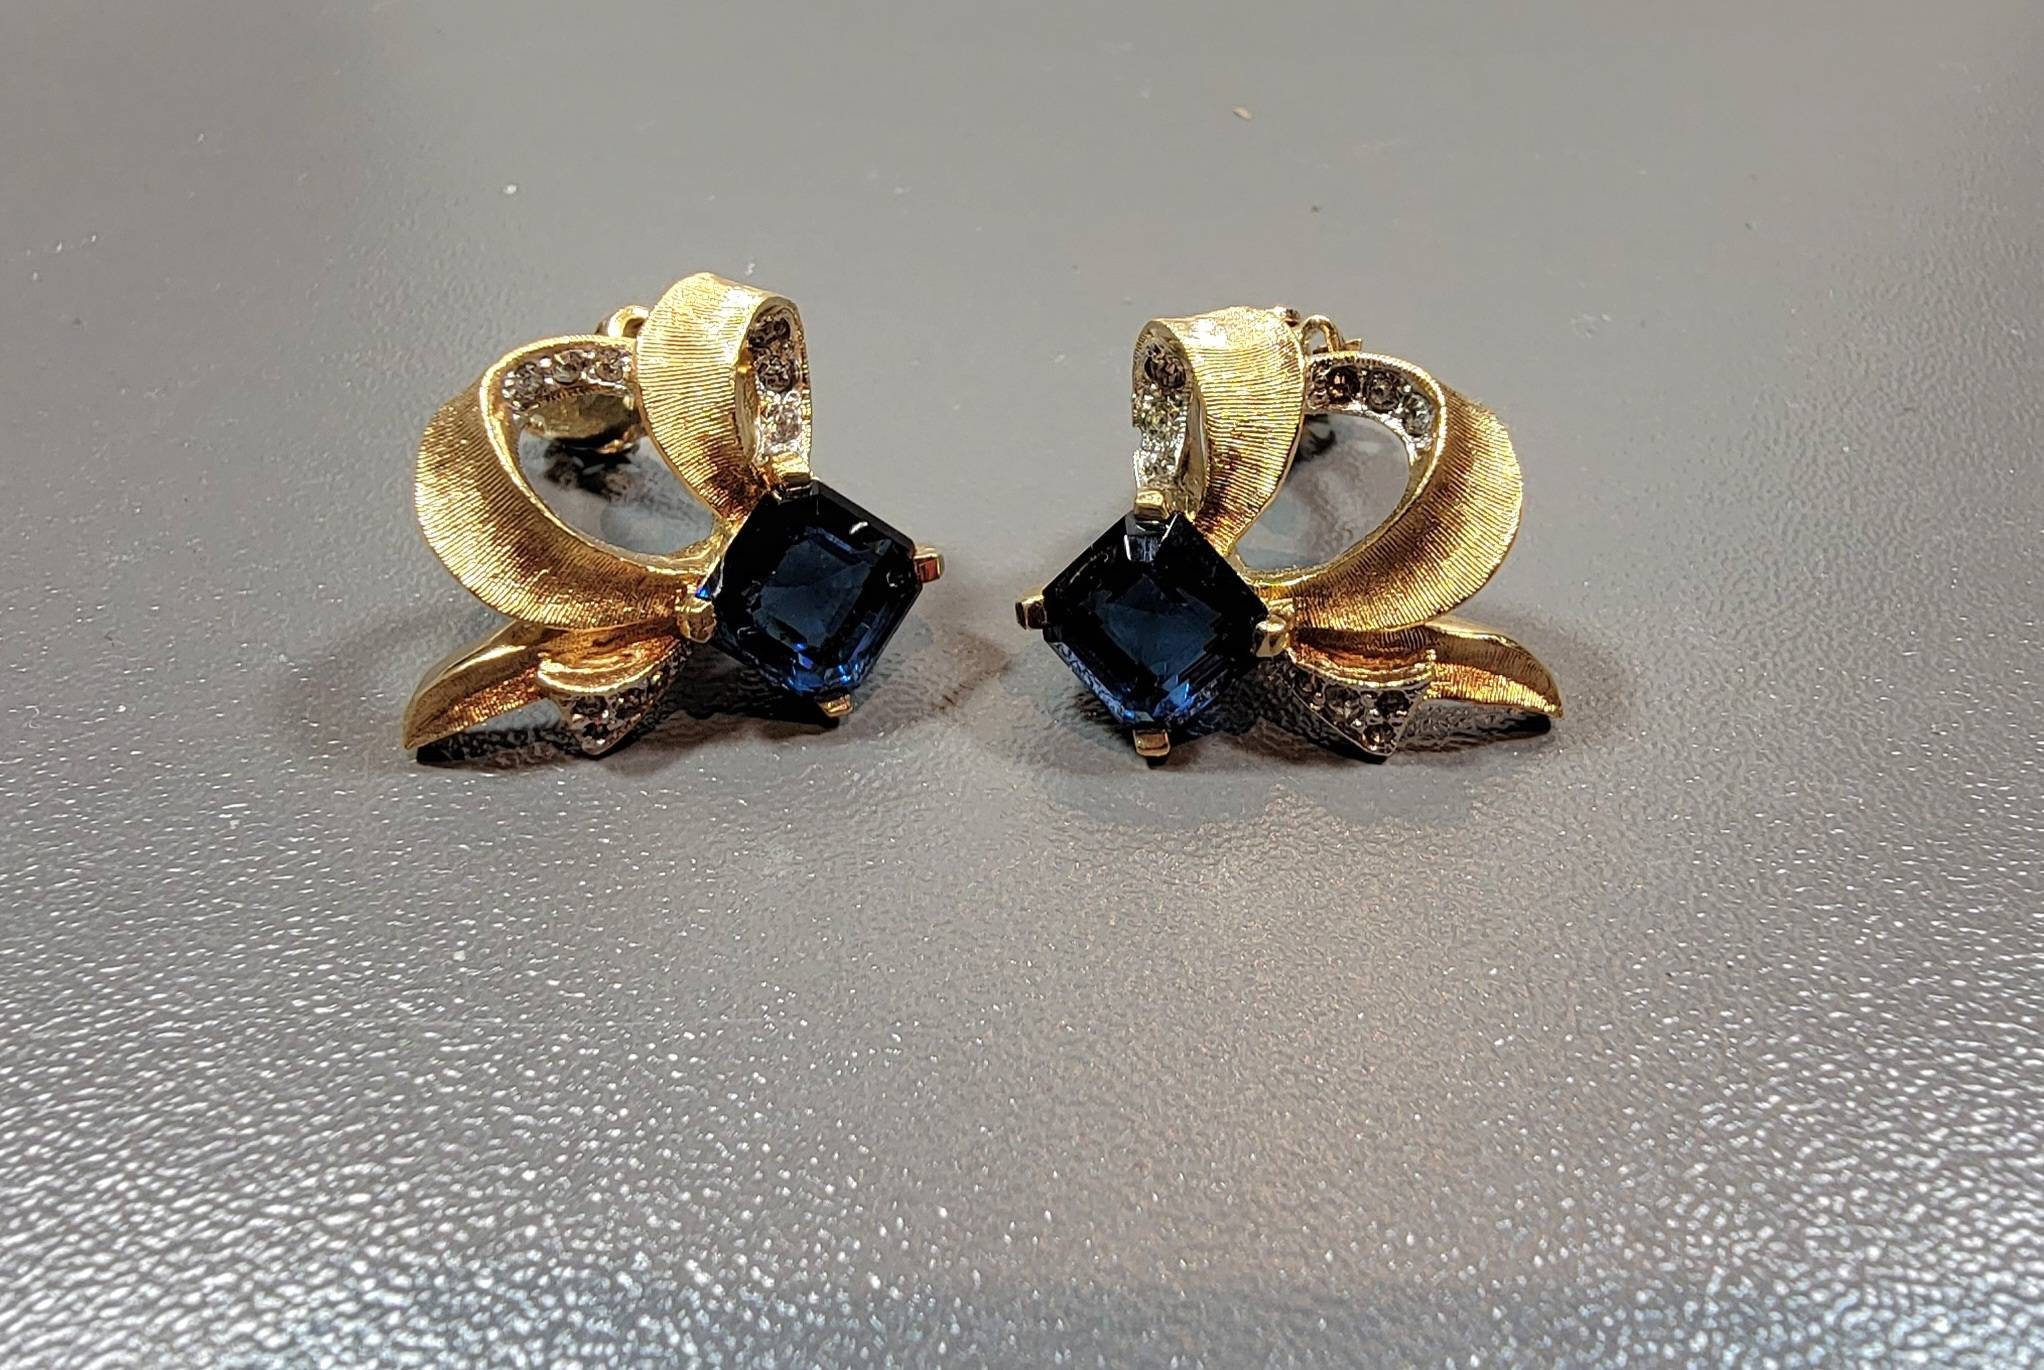 #5538SAPHG - Rhinestone Pear V Pearl Drop Earrings - Sapphire Gold Plated